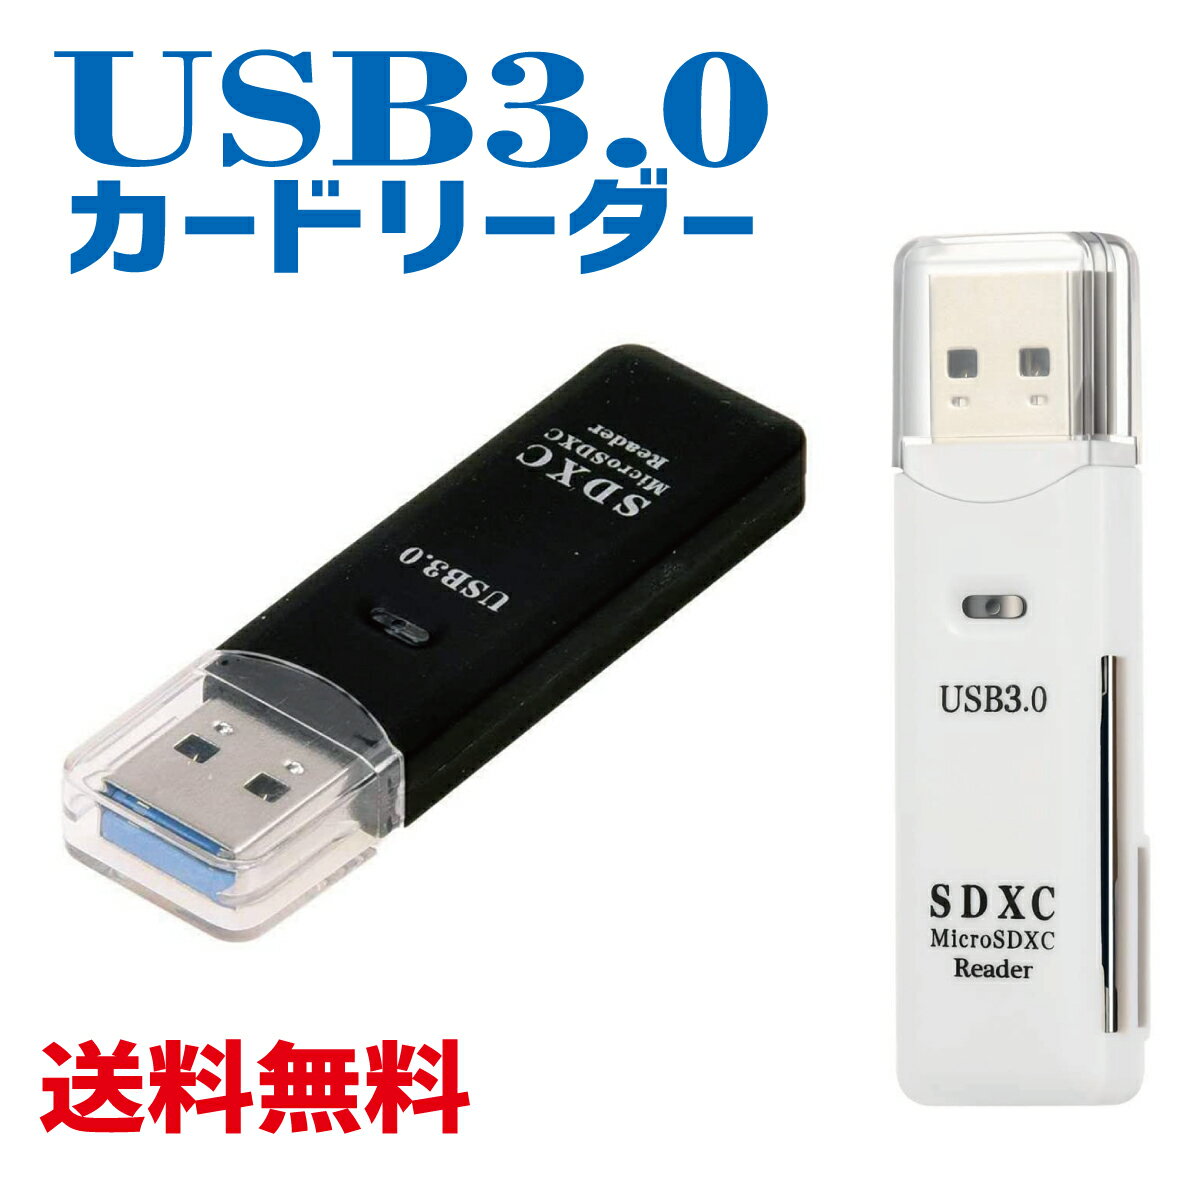 USB3.0J[h[_[SD/SDHC/MMC/RSMMC/MMC mobile/MMC micro/SDXC/UHS-I/MicroSD/T-FLASH